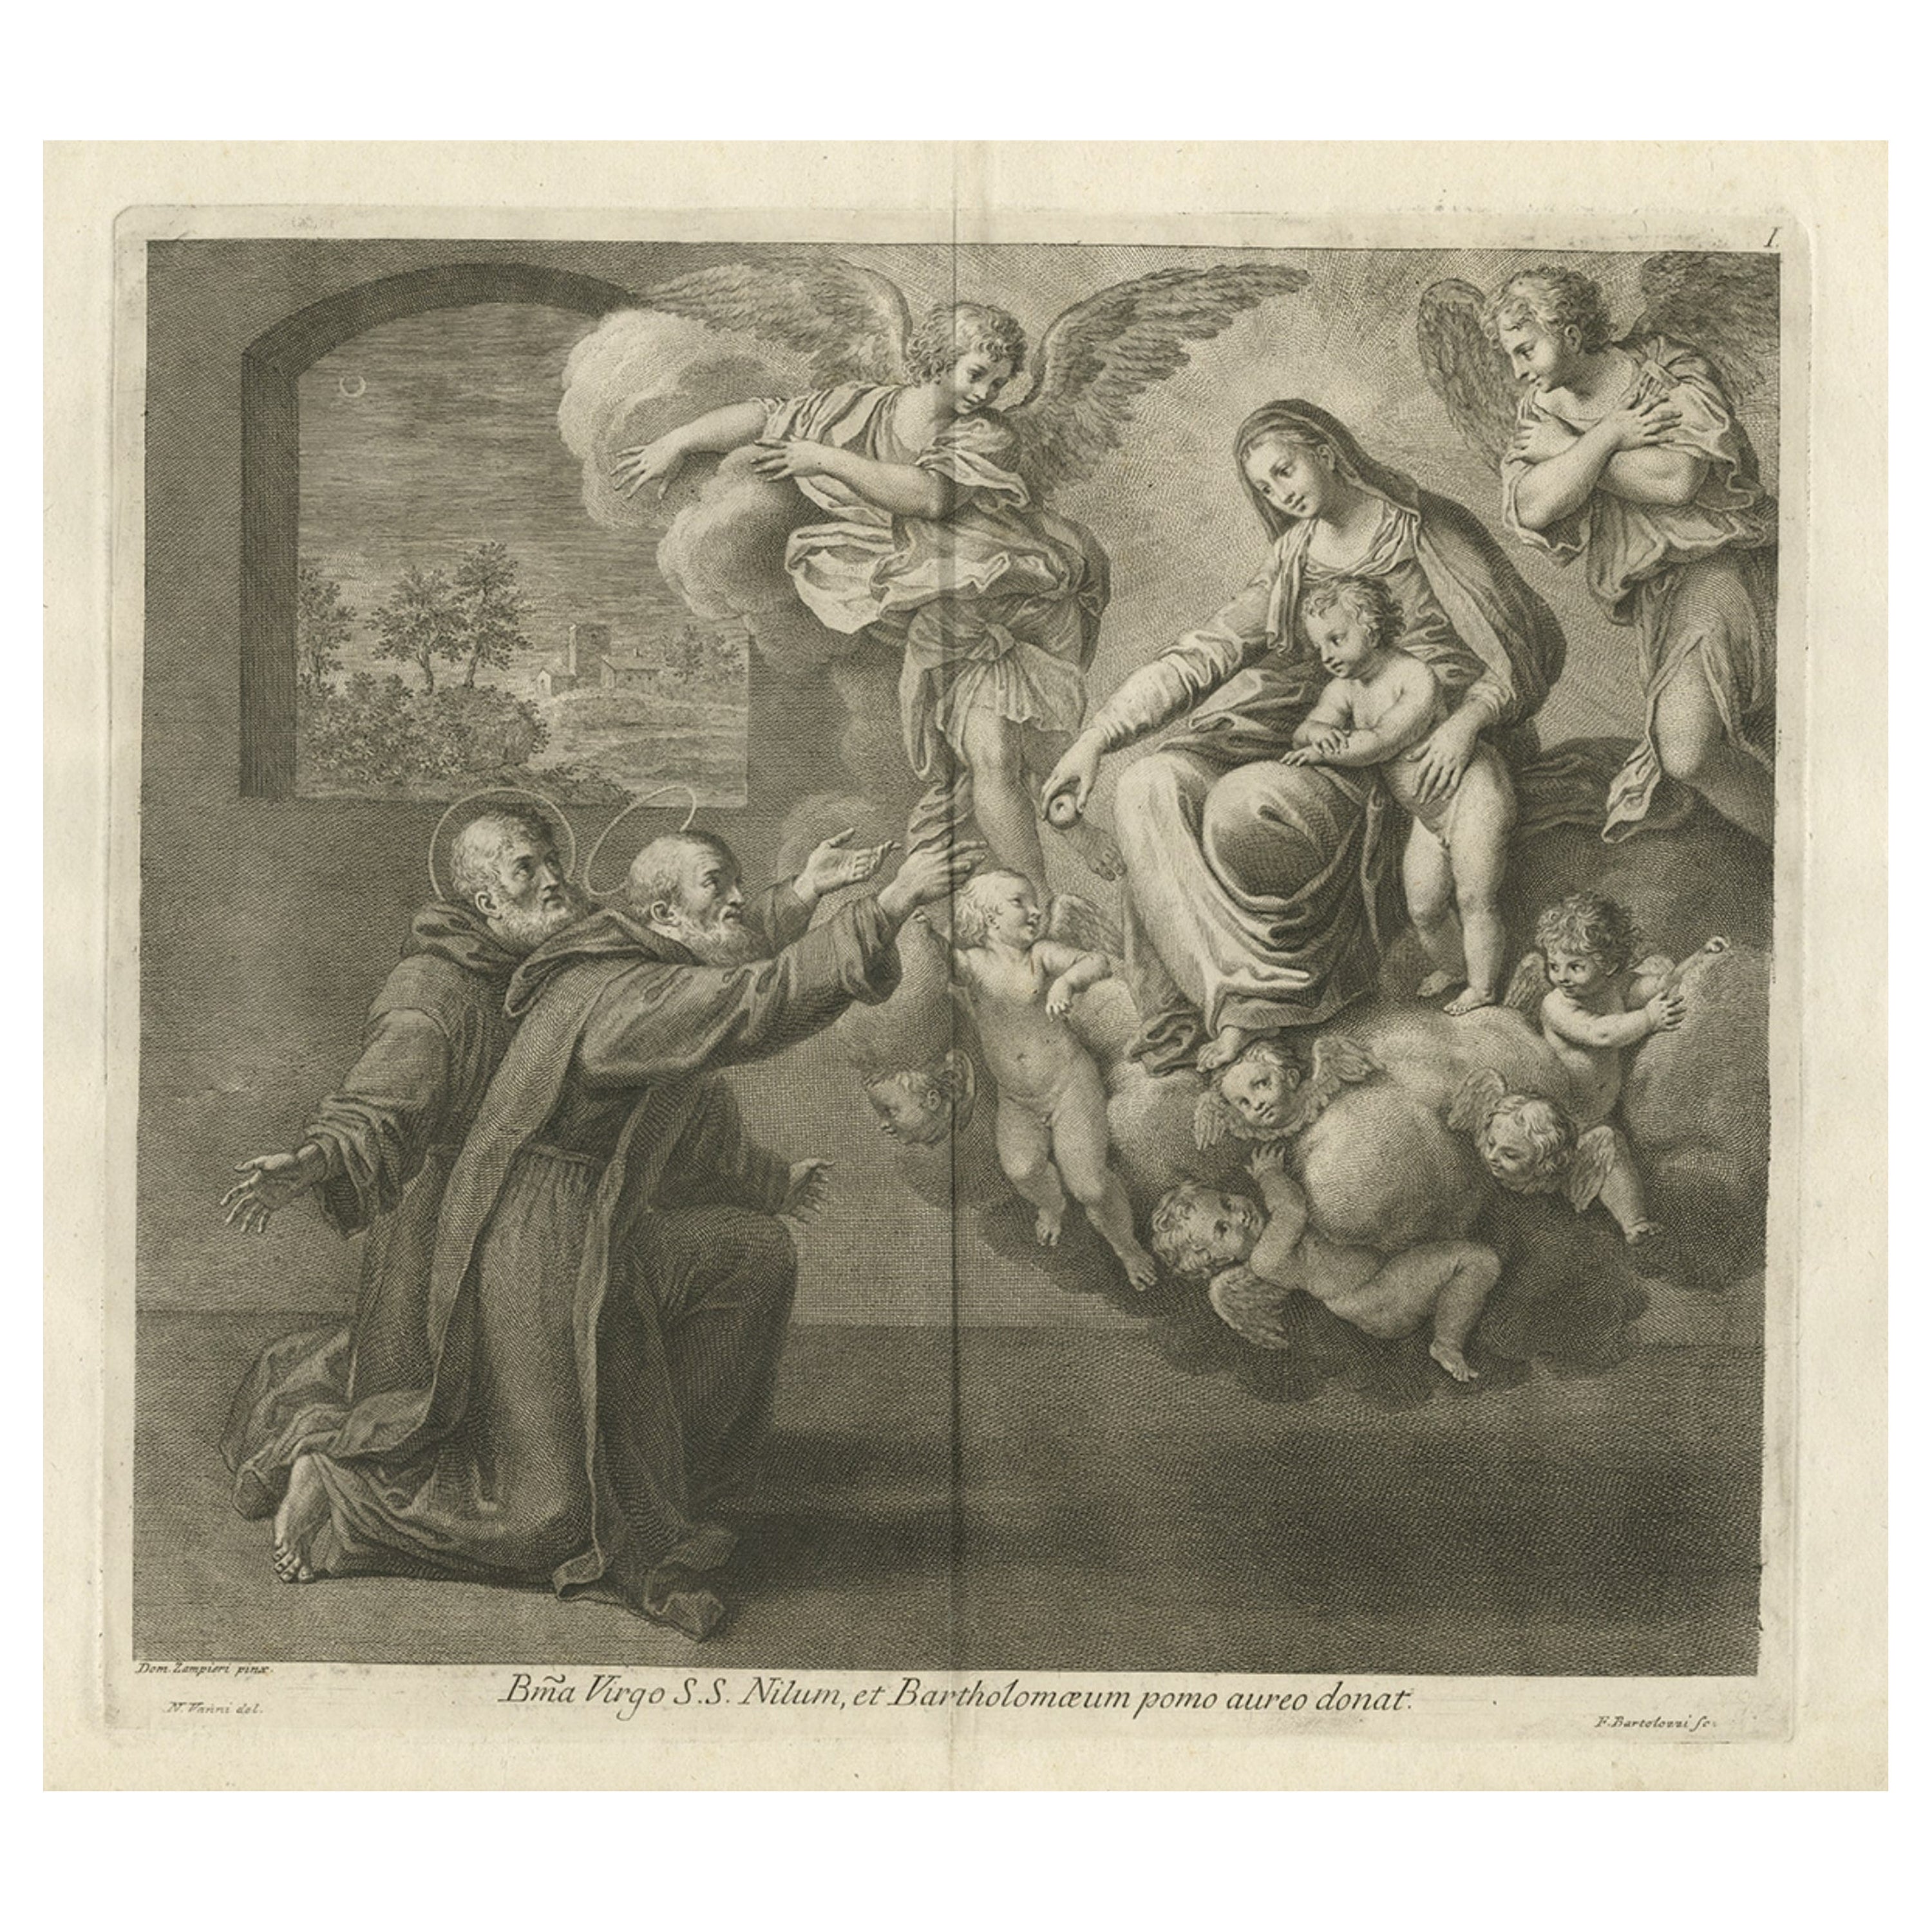 Scarce Plate of Saints Nilus and Bartholomew Kneeling for the Holy Virgin, 1762